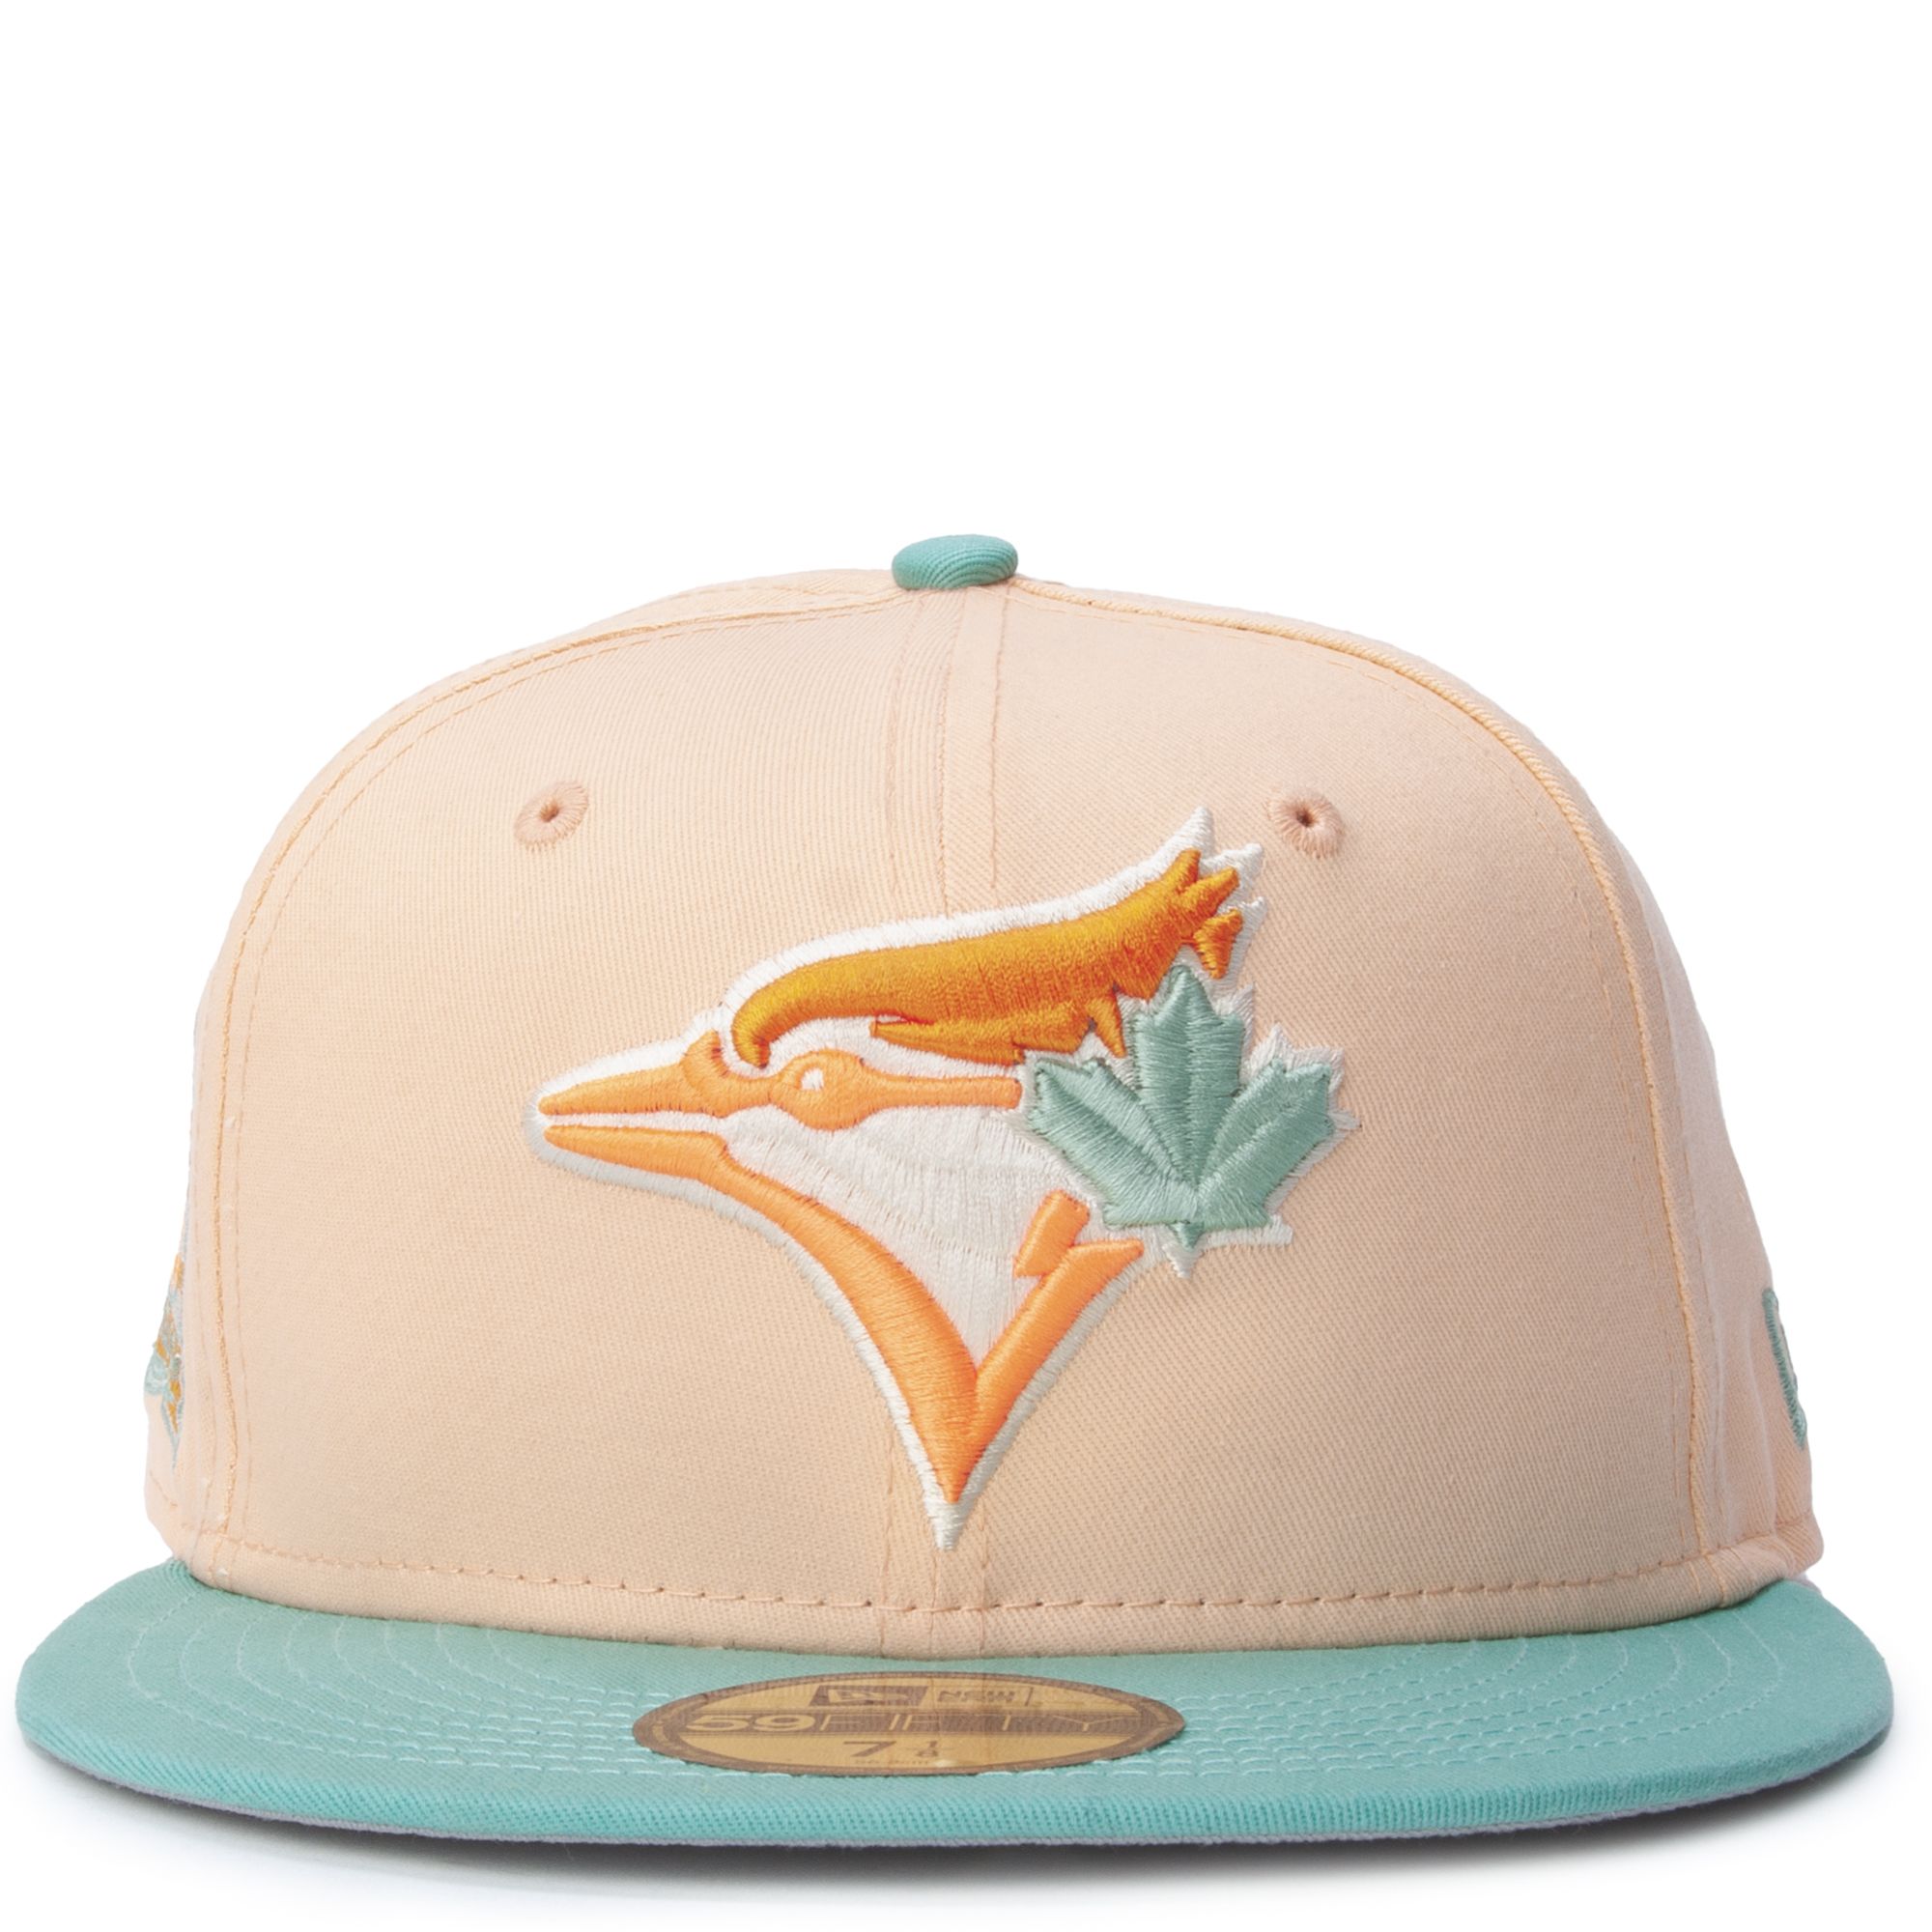 New Era Caps Toronto Blue Jays Peach Mint 59FIFTY Fitted Hat Peach/Mint